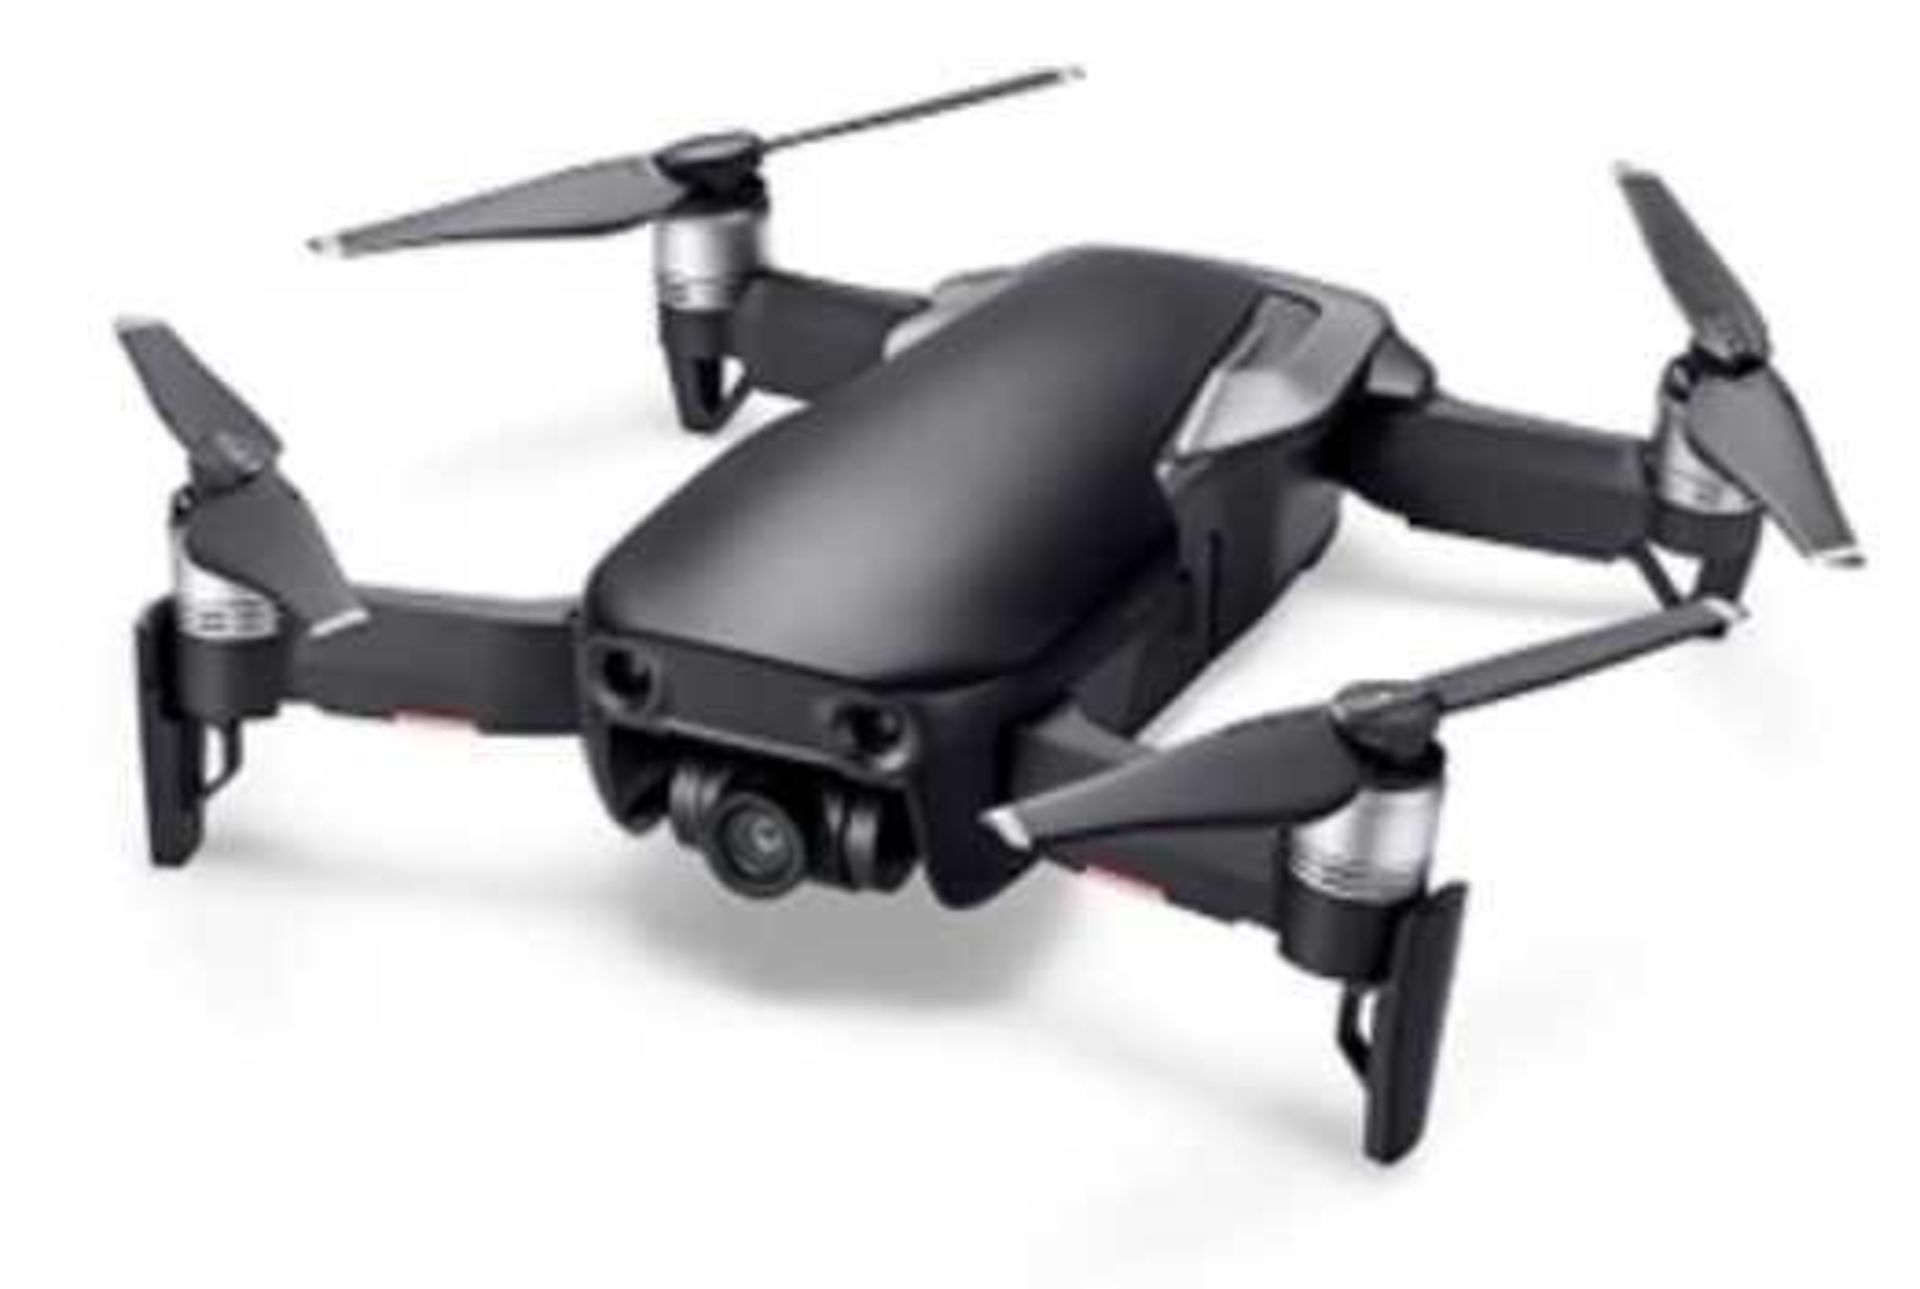 RRP £100 Lot To Contain 2 Boxed Dji Mavic Air Part 17 Replica Drones